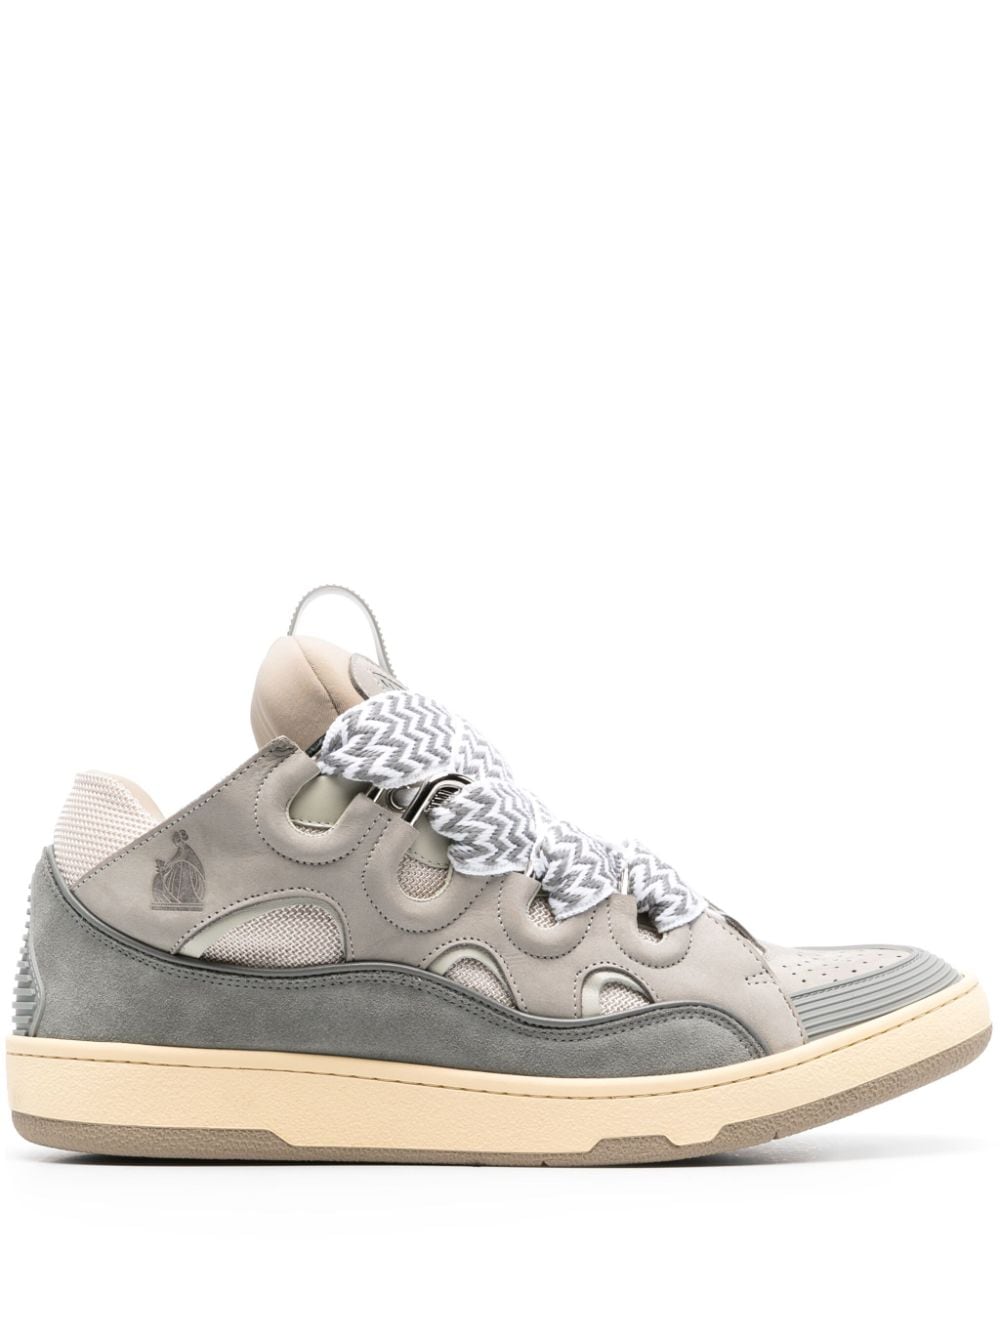 Lanvin Curb leather sneakers - Grey von Lanvin